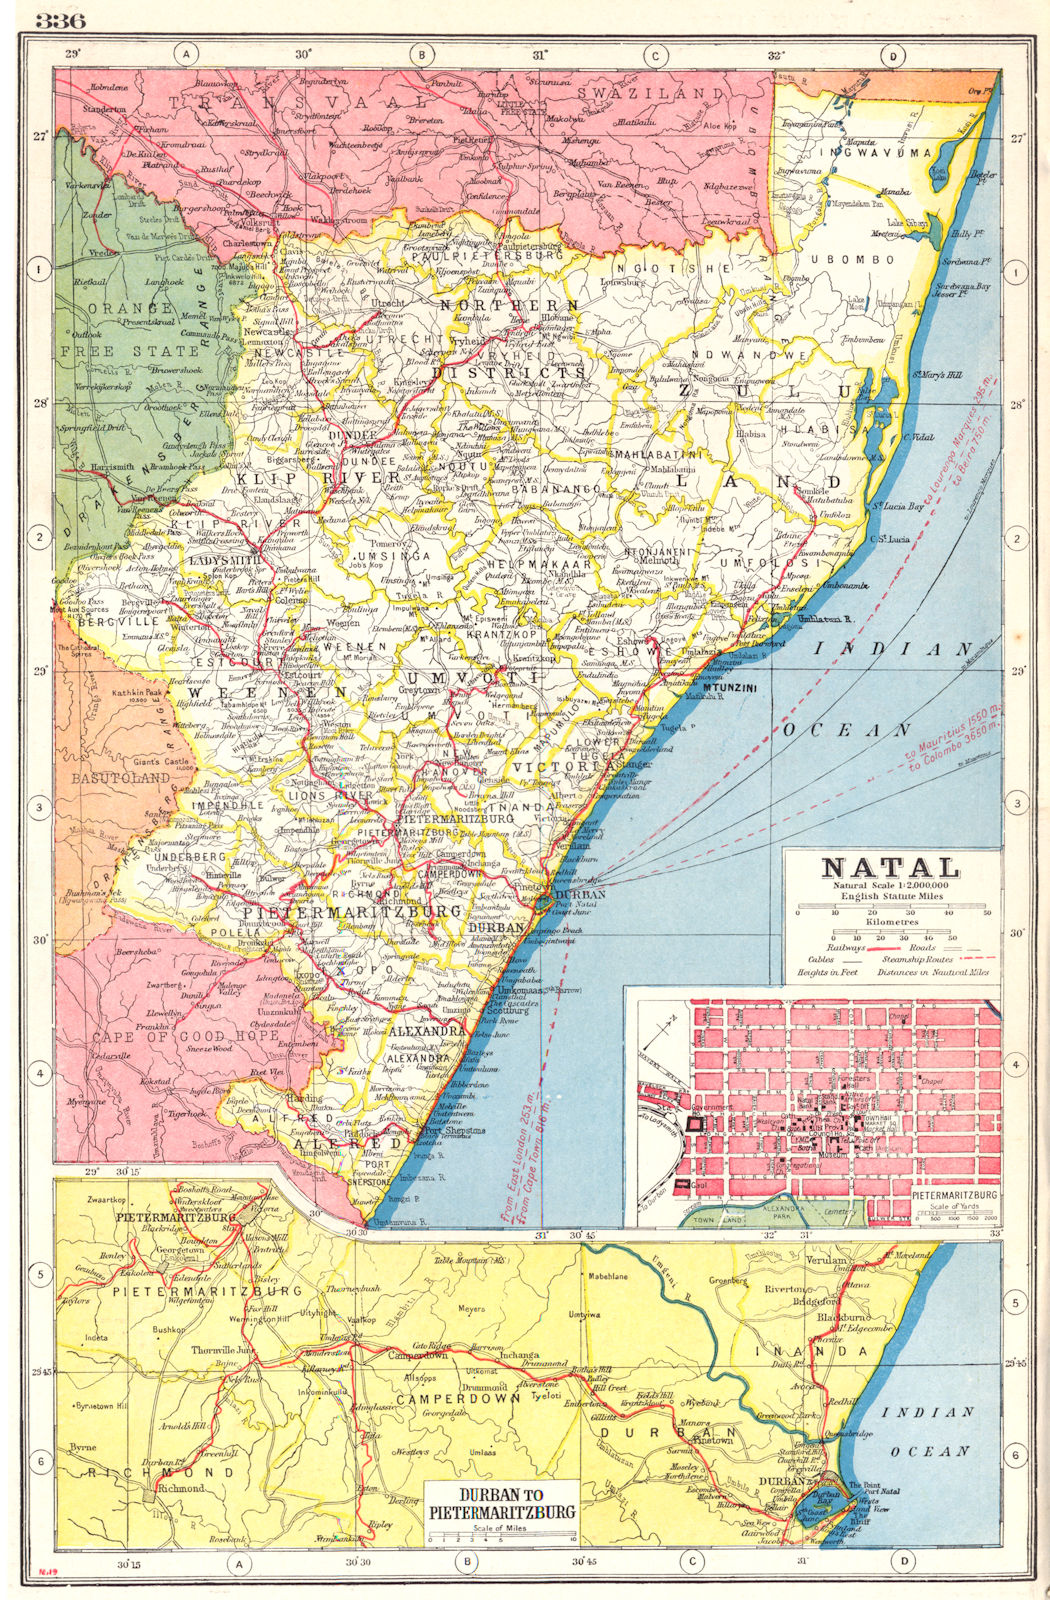 NATAL. Inset Pietermaritzburg city plan. Railways. Durban. HARMSWORTH 1920 map